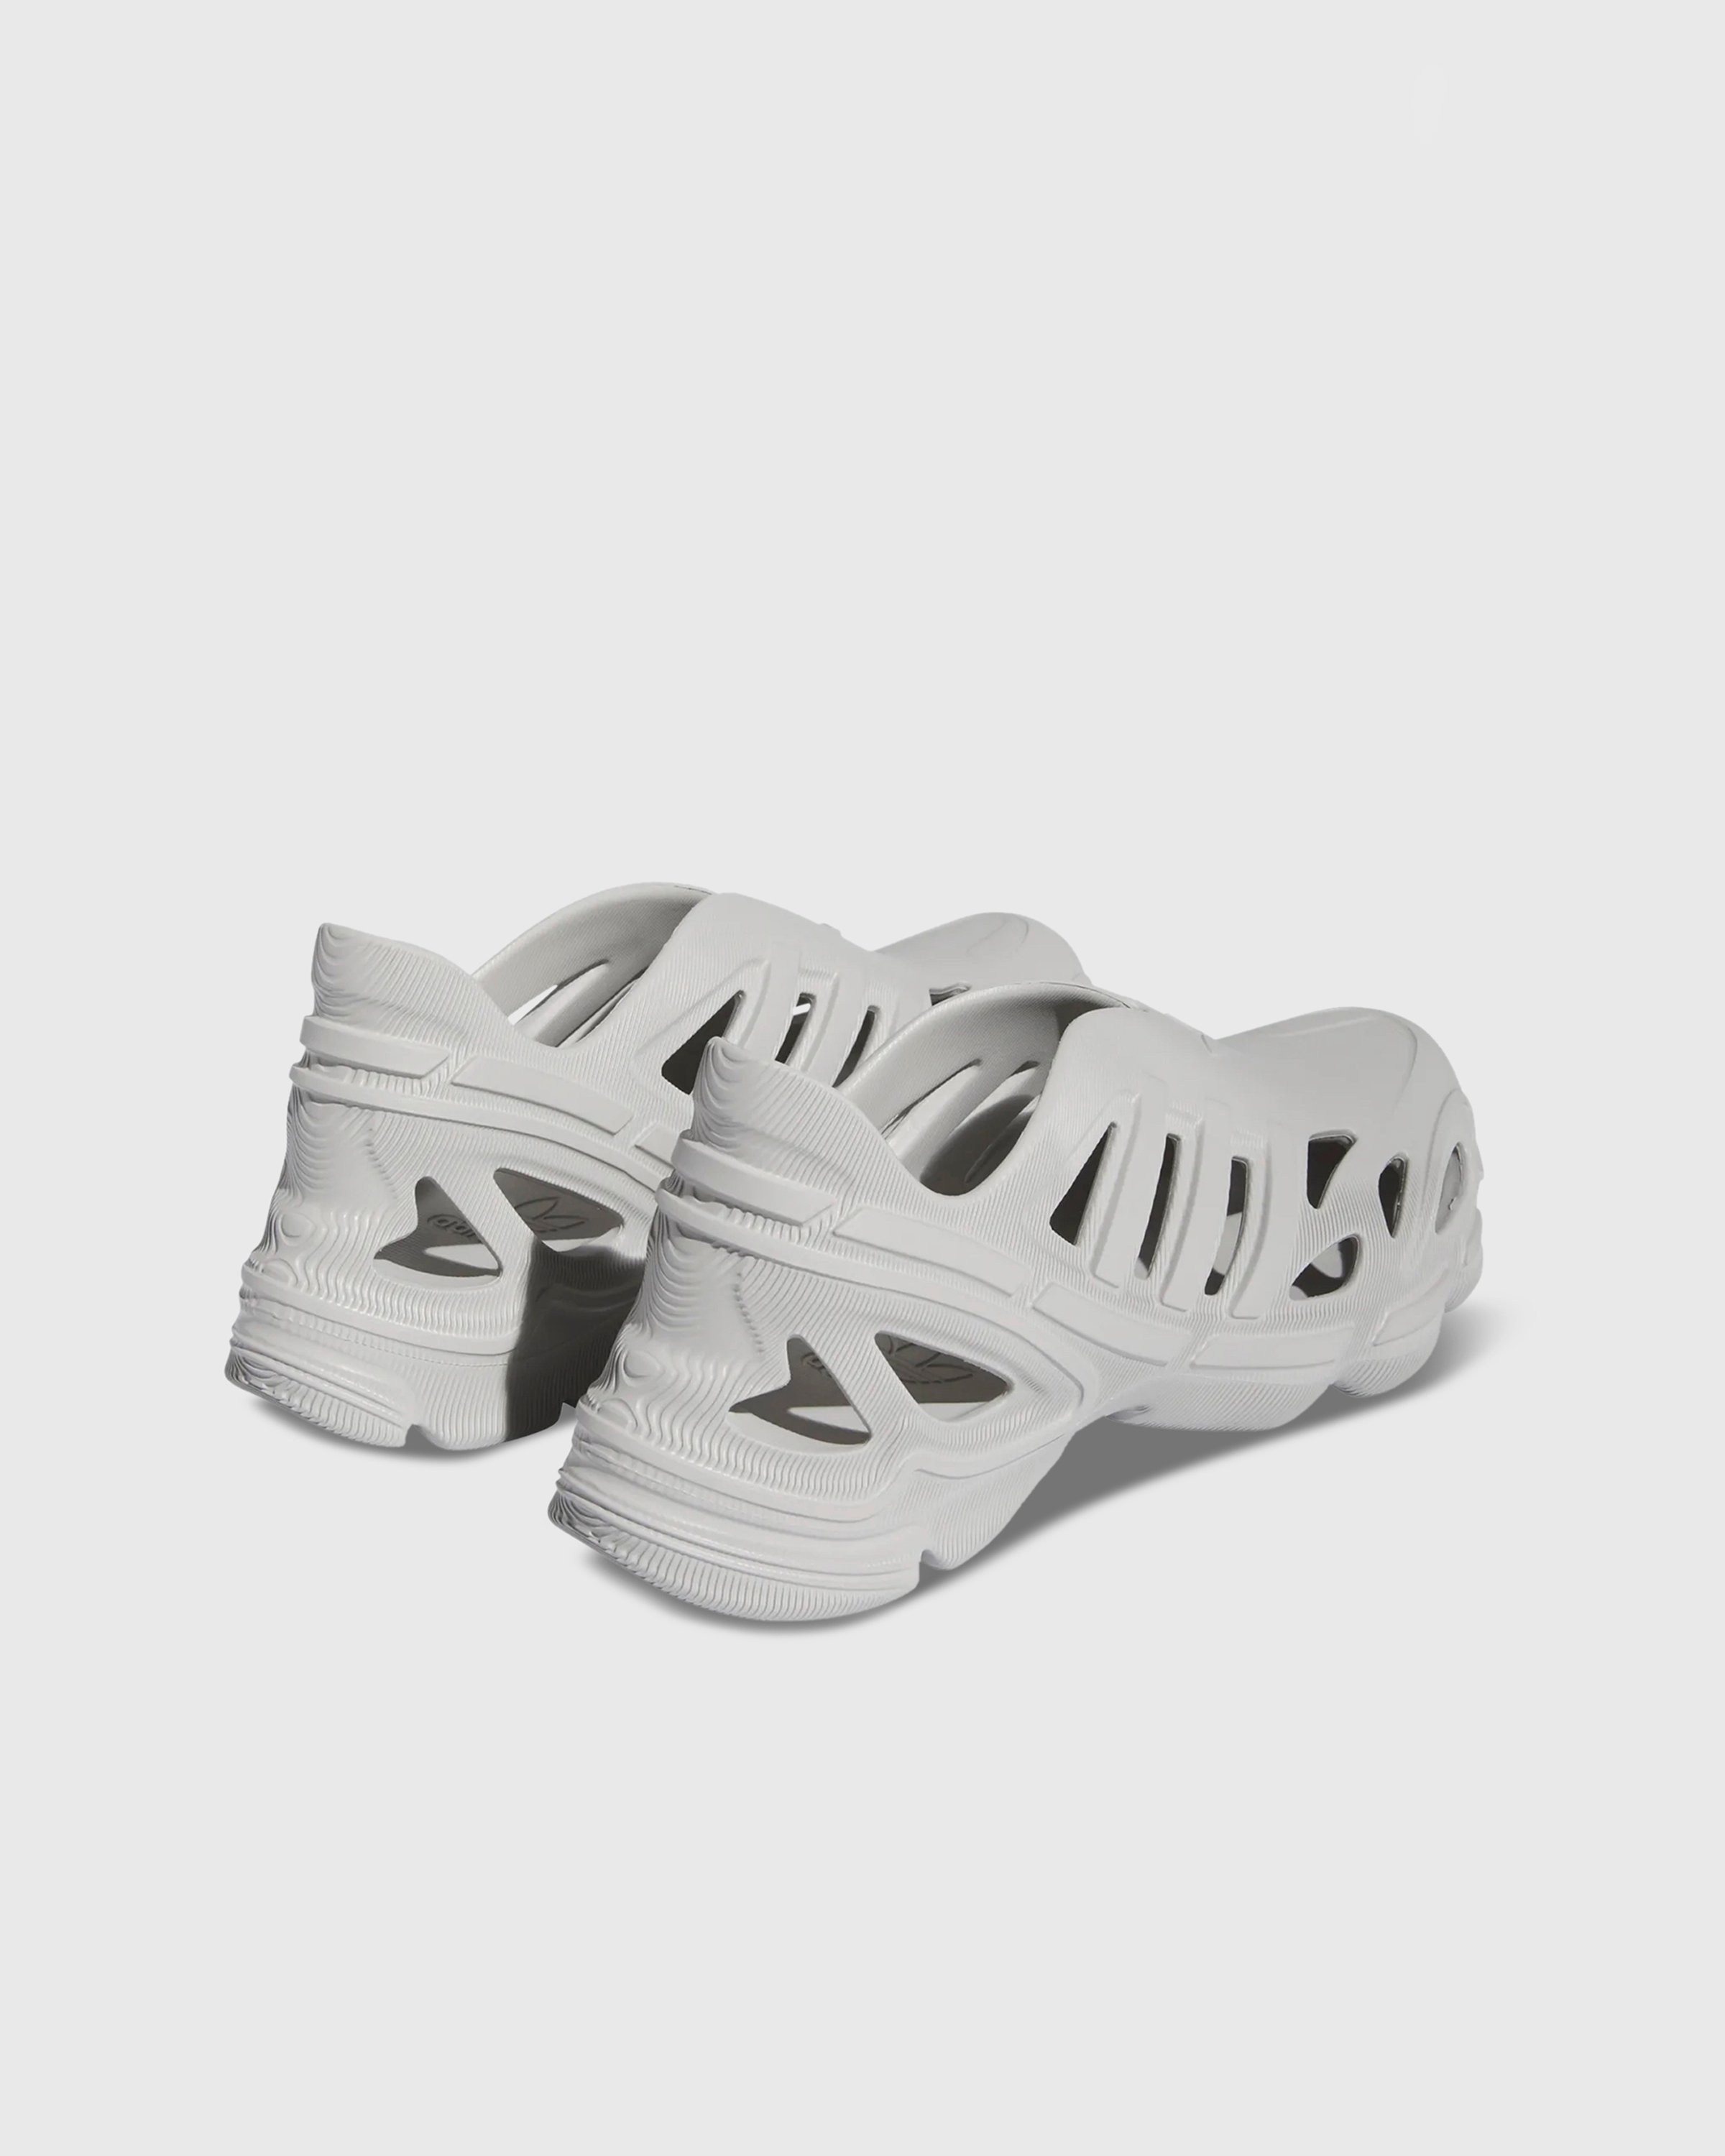 Adidas - adiFOM SUPERNOVA GRETWO/GRETWO/GRETWO - Footwear - Grey - Image 4